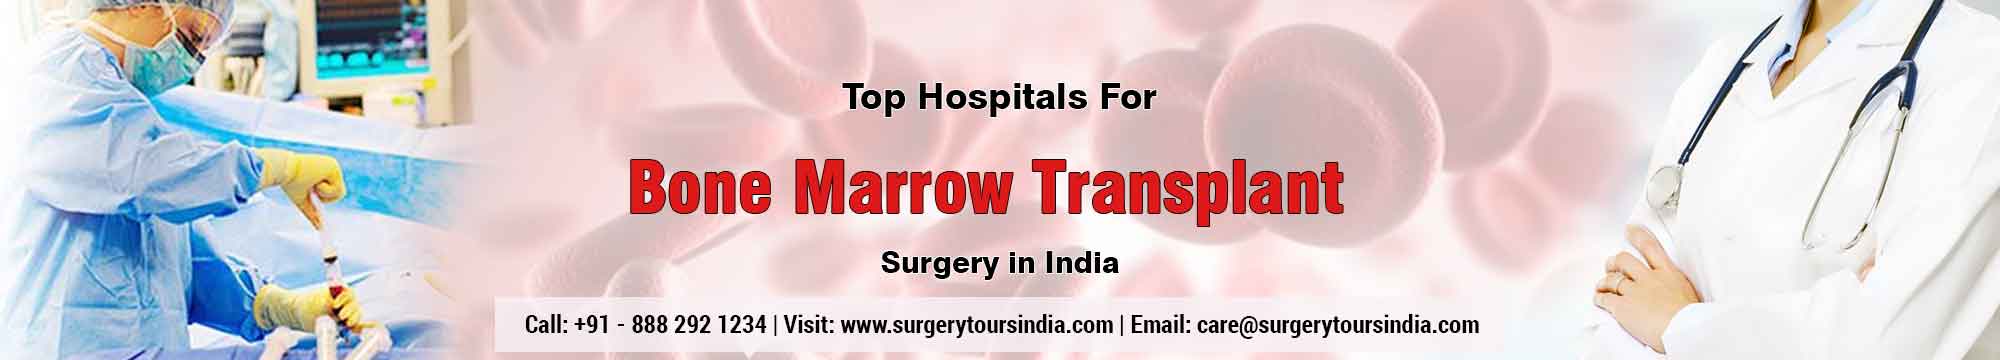 Bone Marrow Transplant Surgery